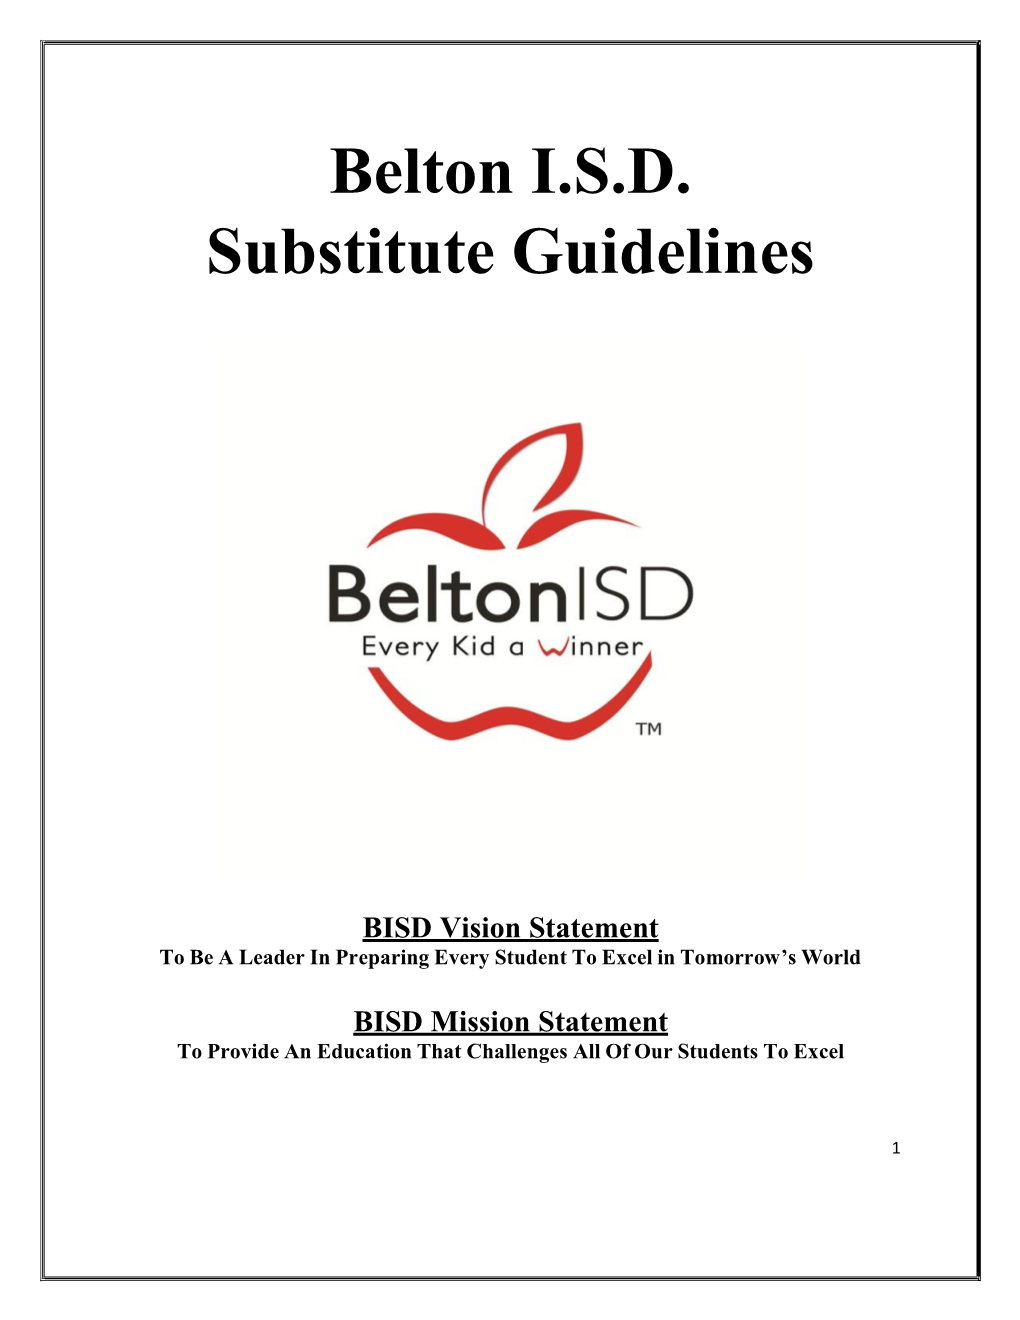 Belton I.S.D. Substitute Guidelines